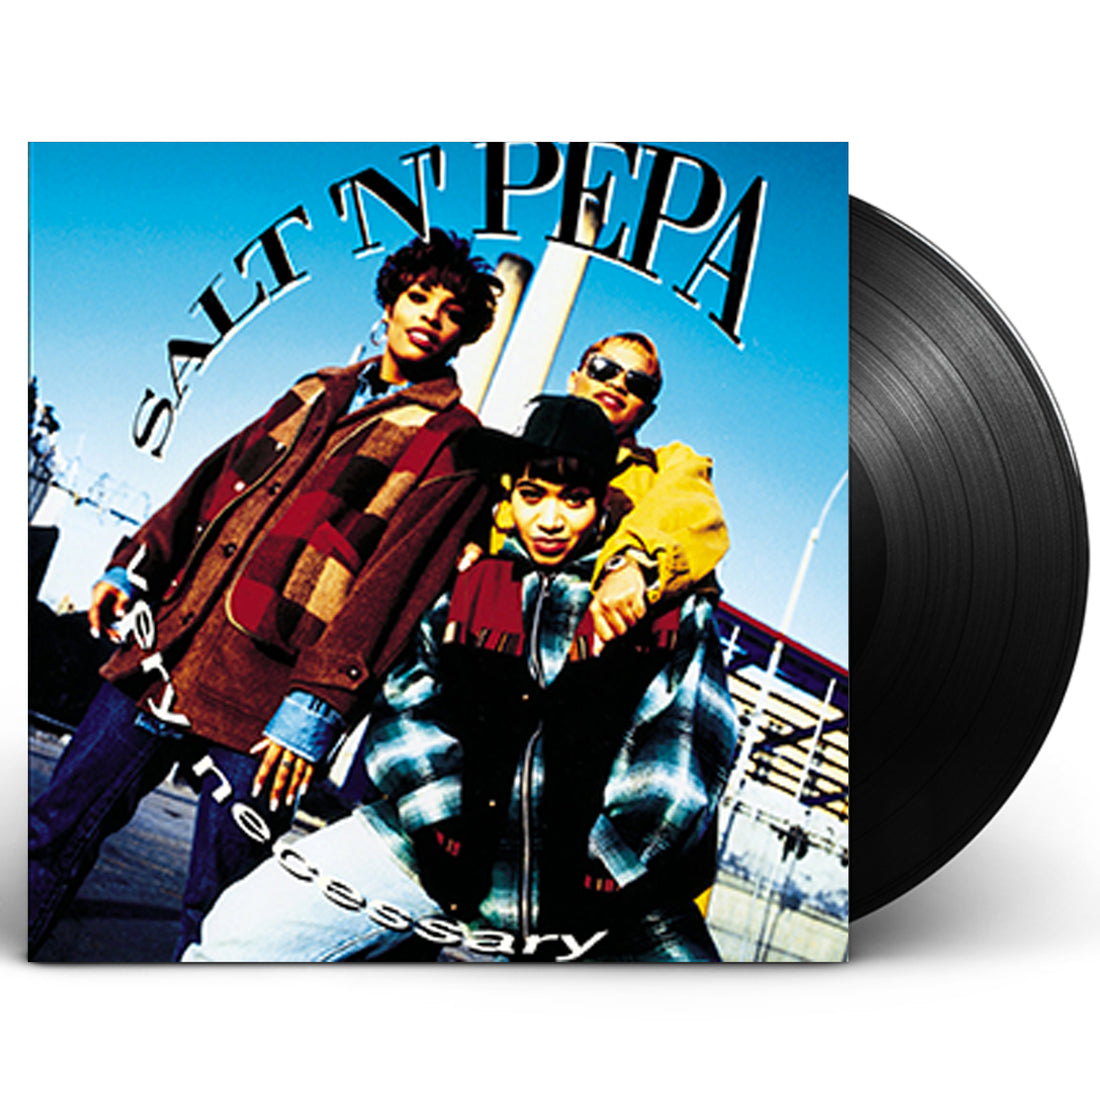 Salt-N-Pepa "Very Necessary" 30th Anniversary 2xLP Vinyl